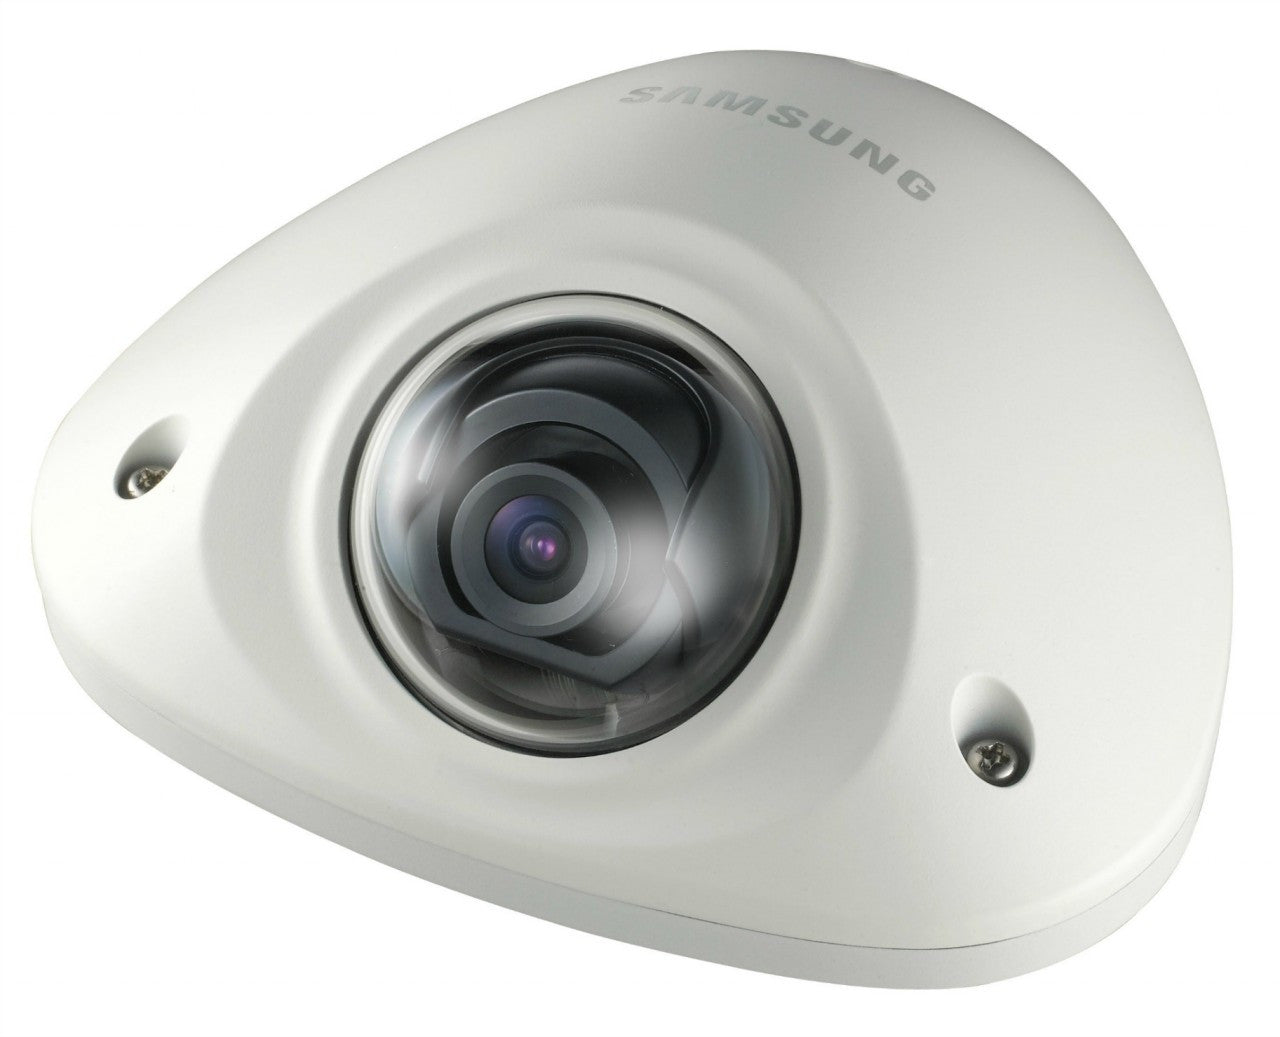 Samsung SNV-5010 1.3 Megapixel HD Vandal-Resistant Network Flat Camera